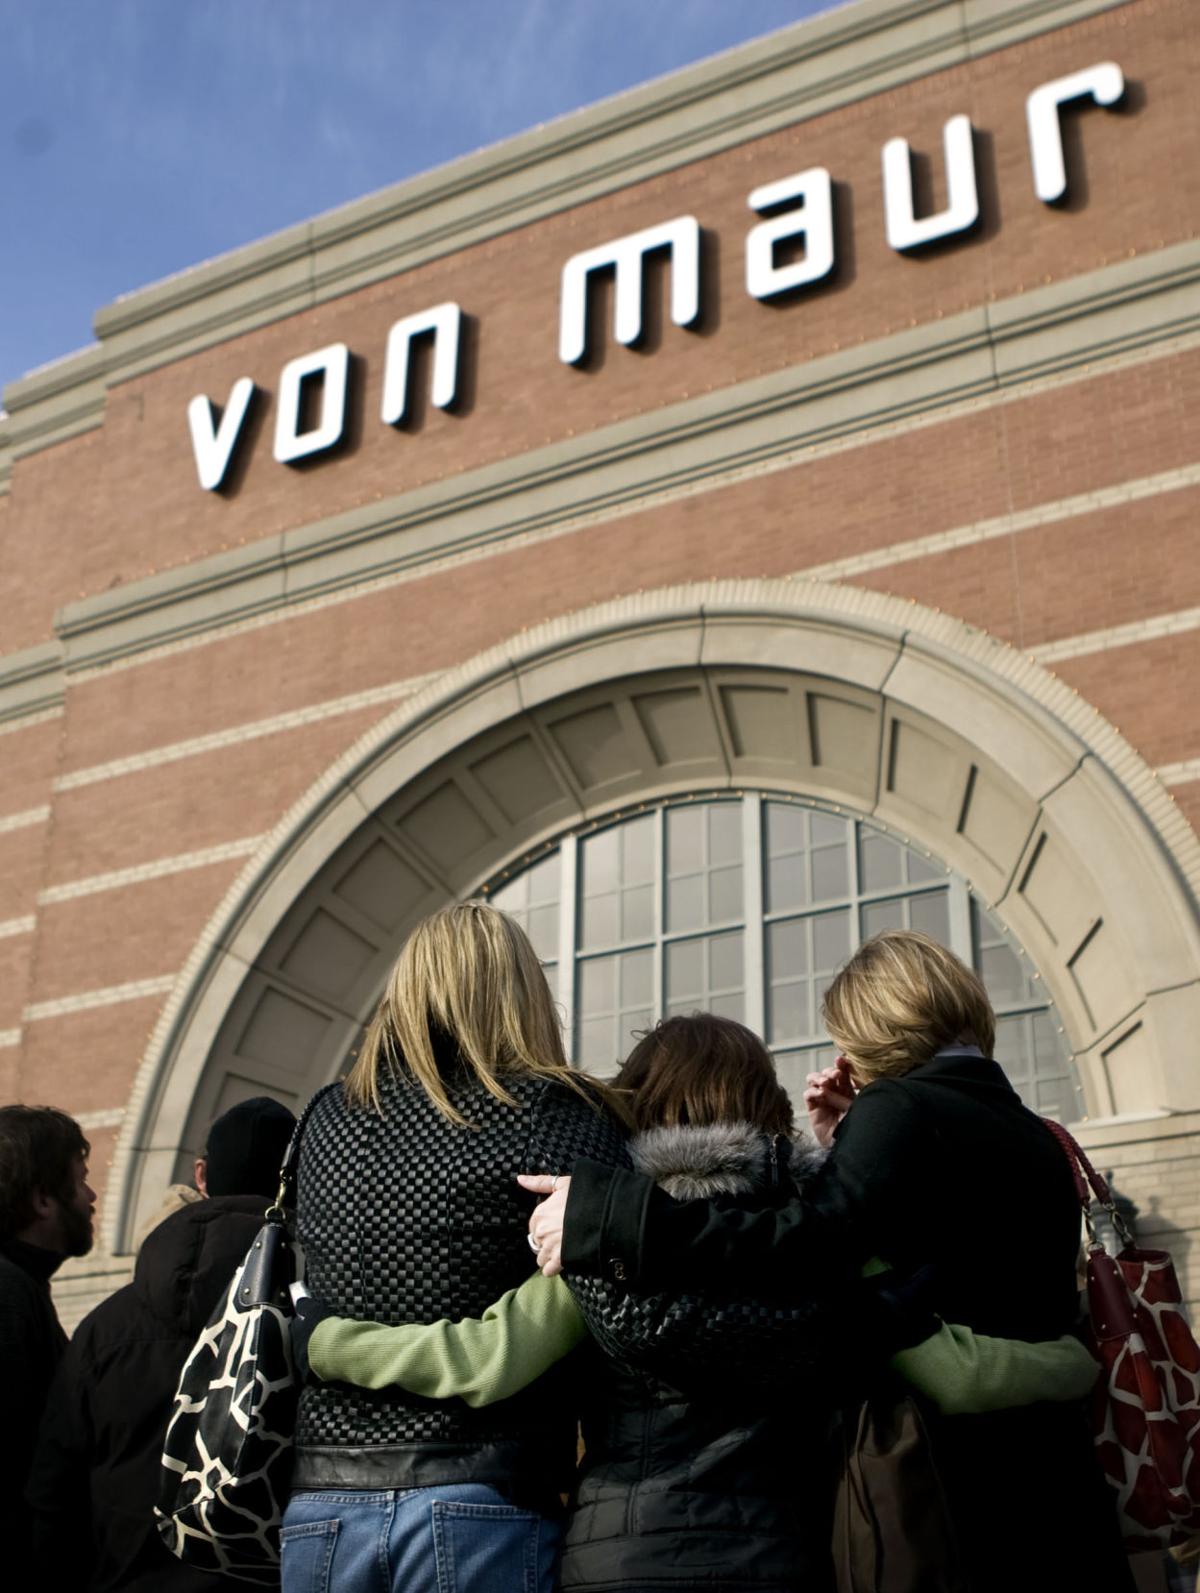 Von Maur aftermath: Tragedy unfolded, then spurred changes in how